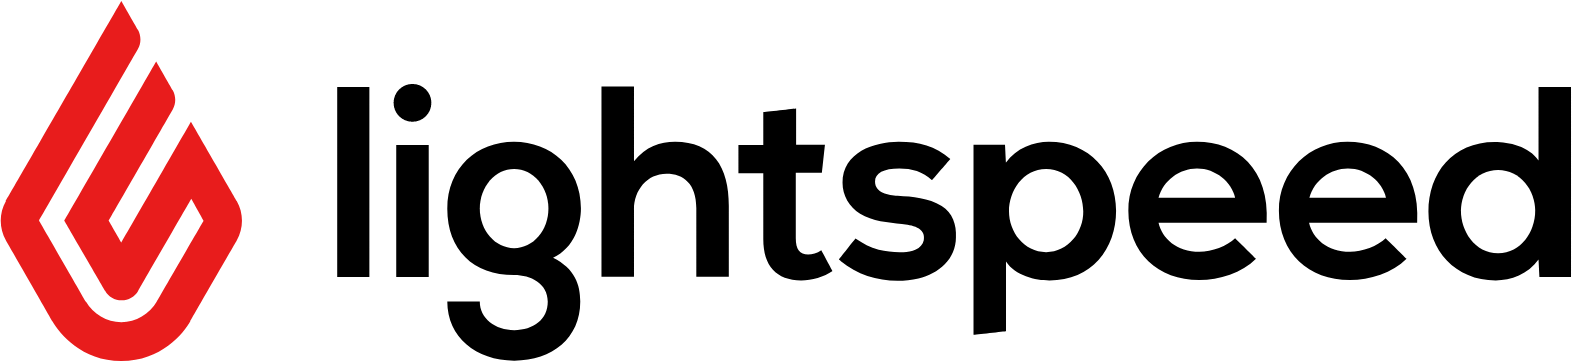 lightspeed POS logo